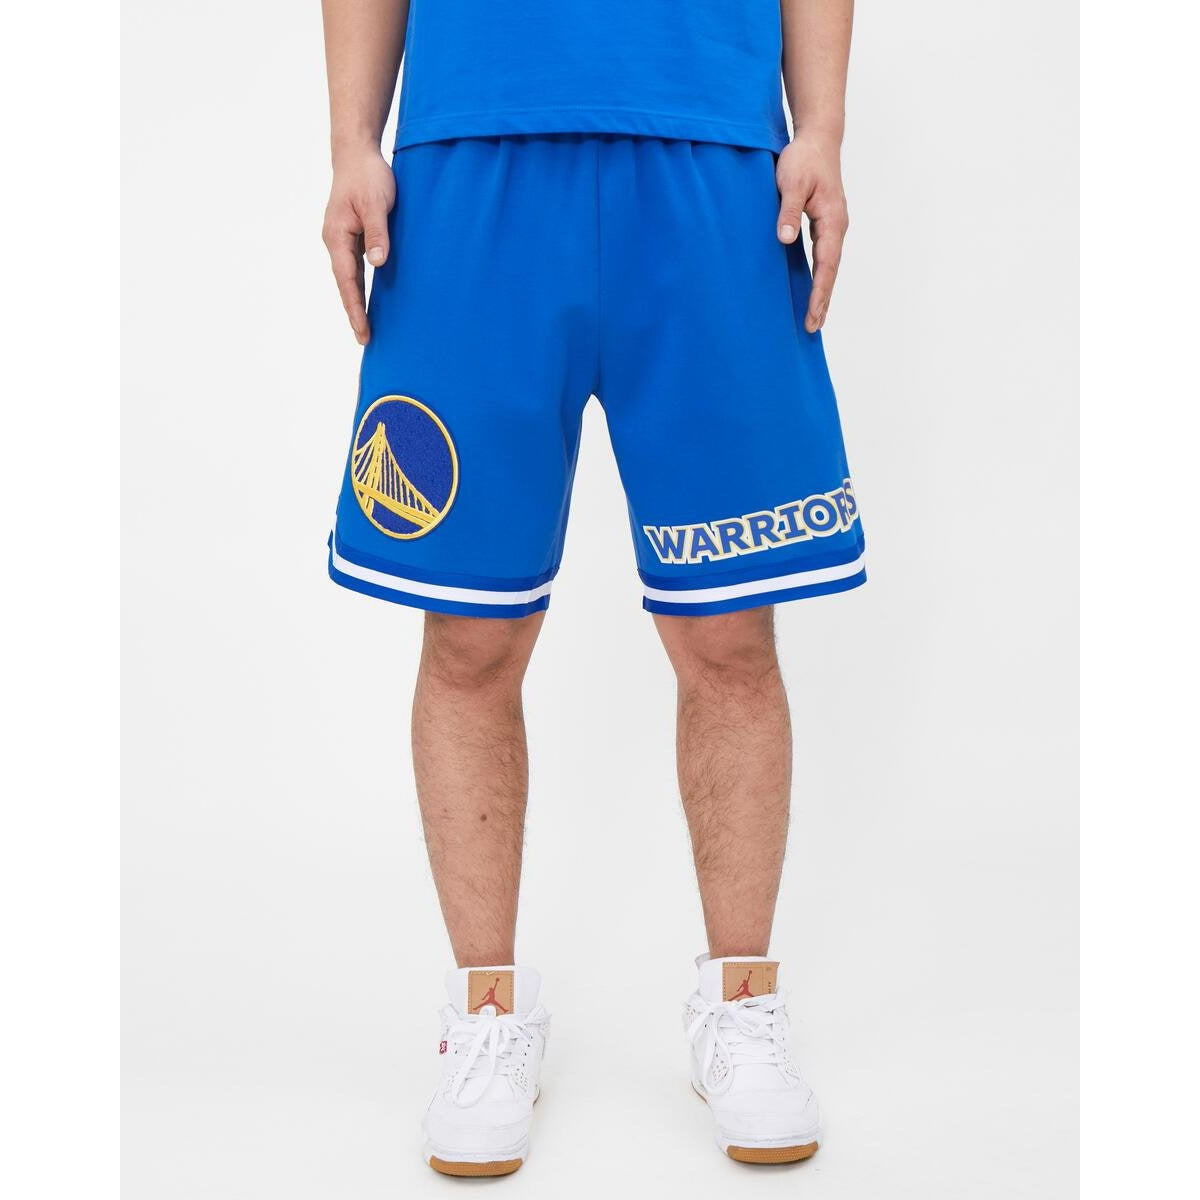 Pro Standard NBA Shorts